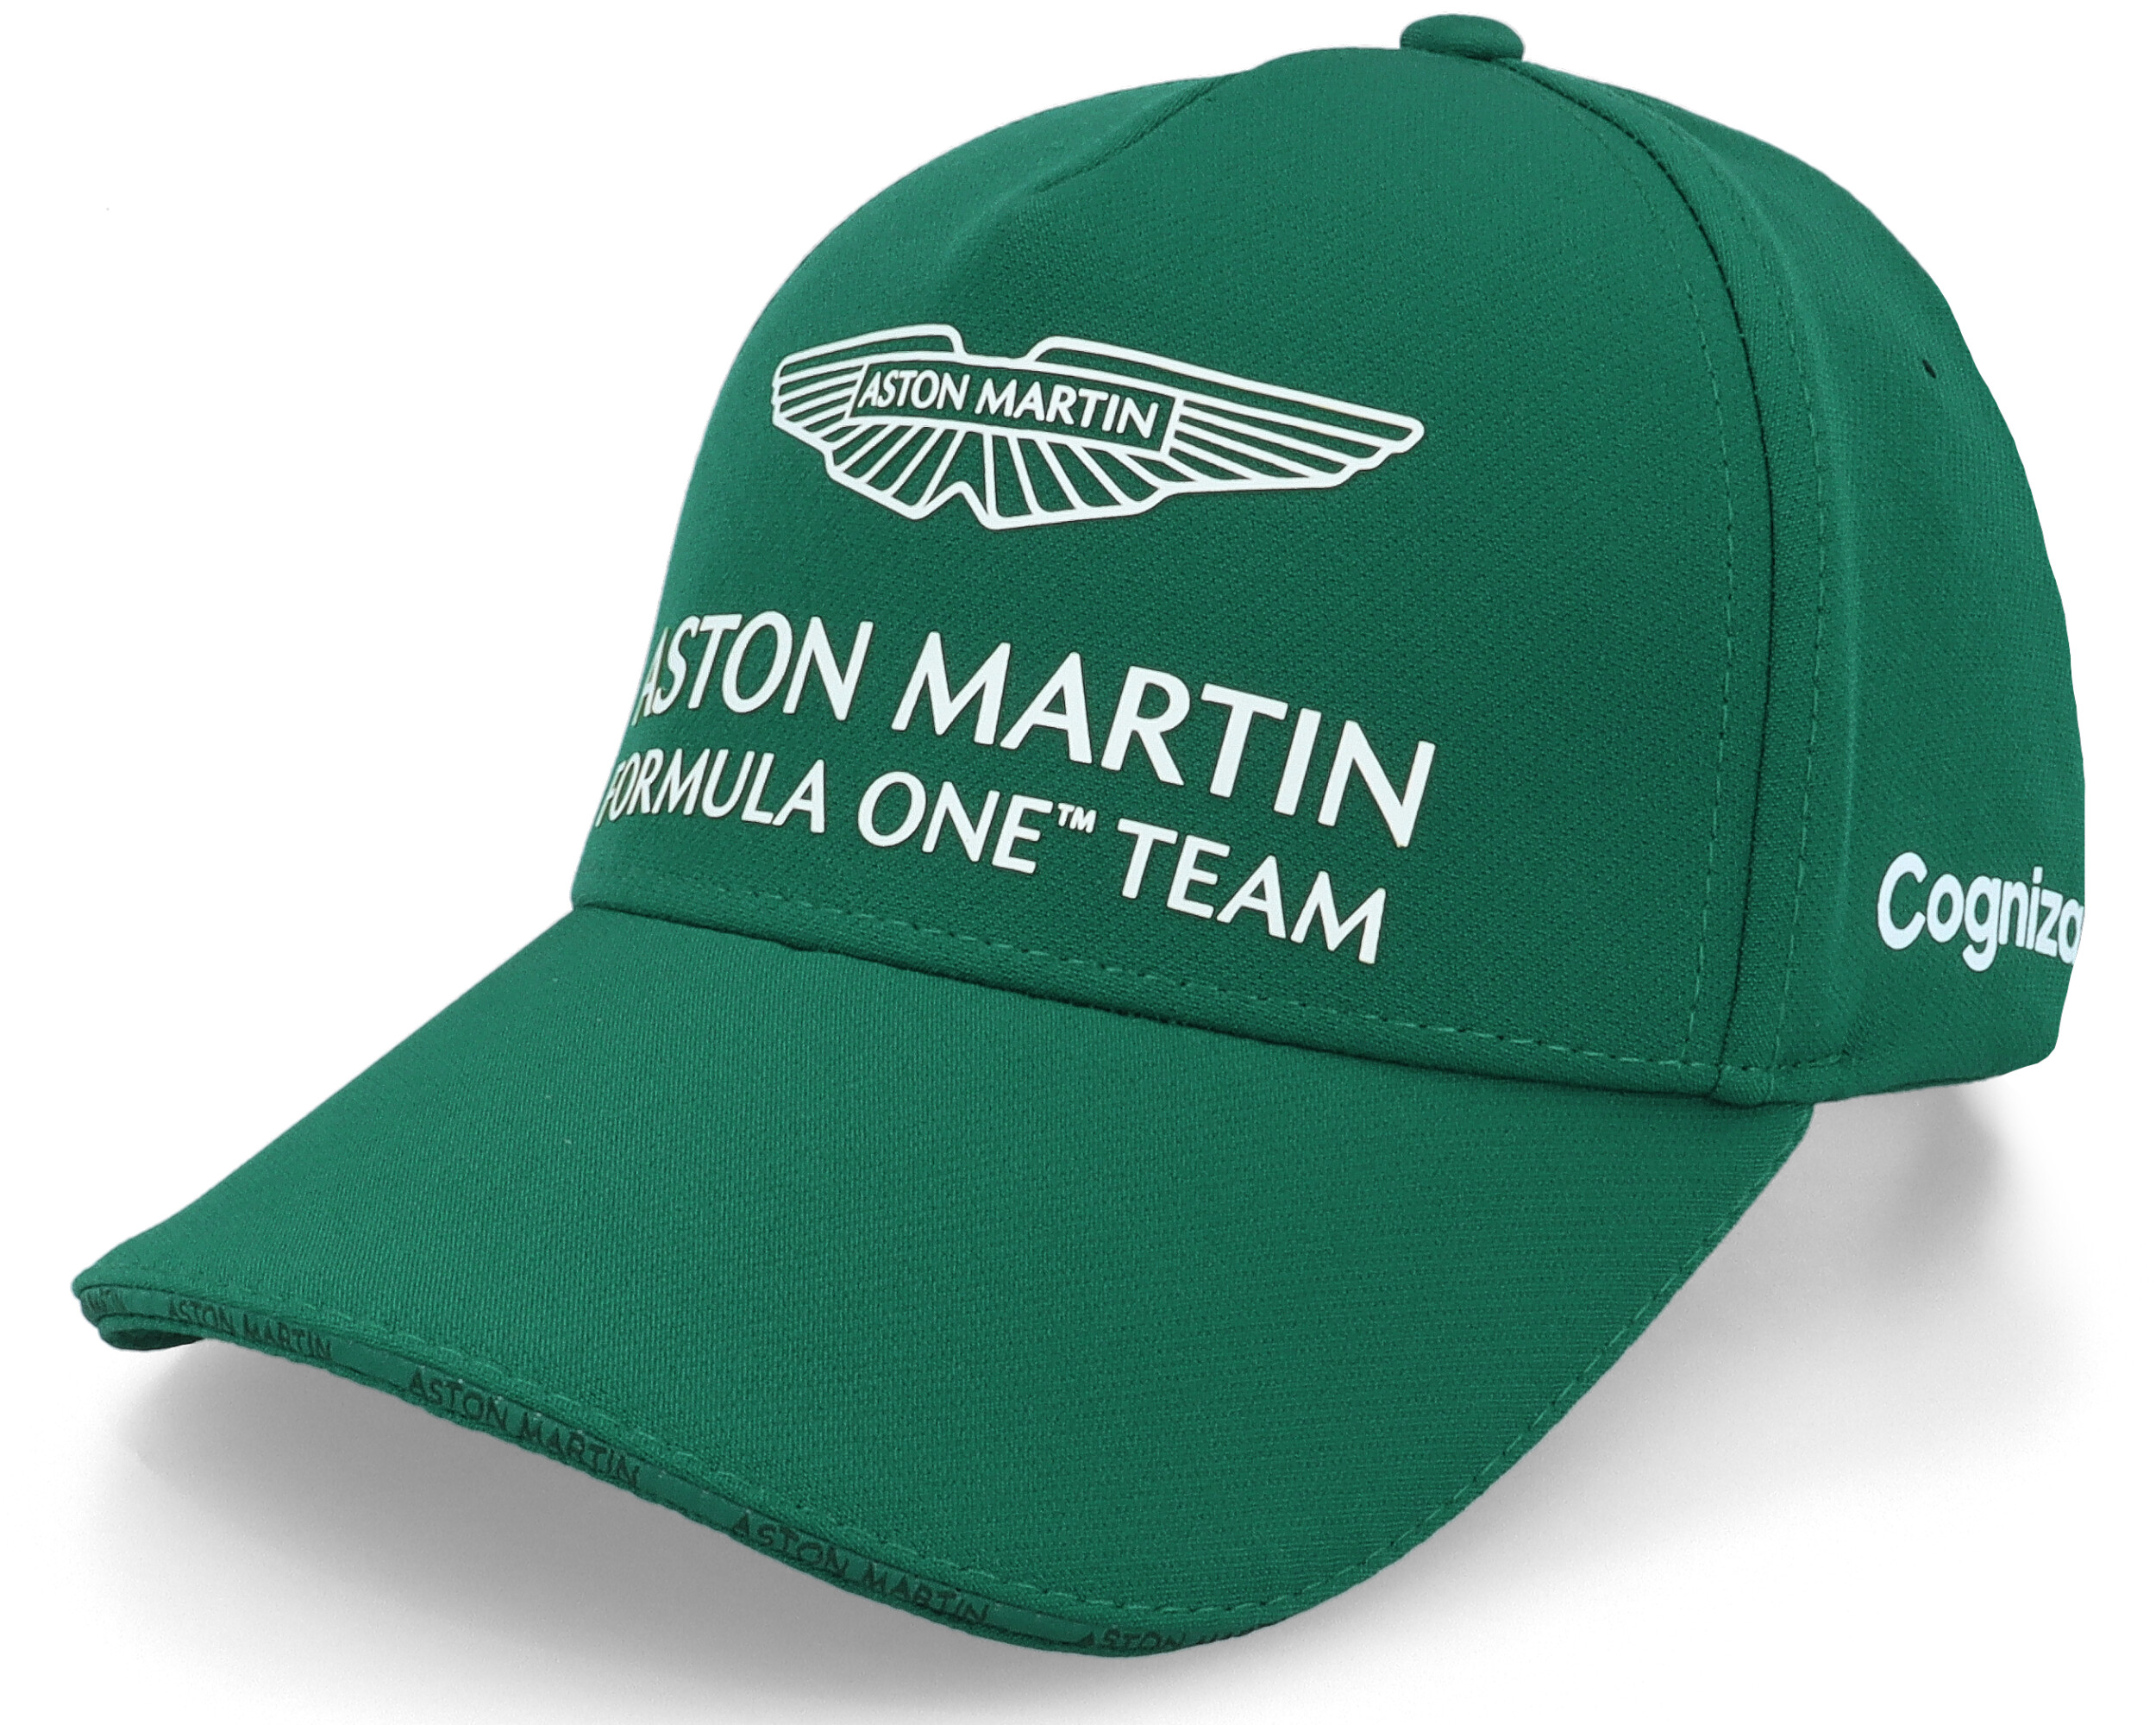 Aston Martin F1 Team Cap Green Adjustable Formula One cap